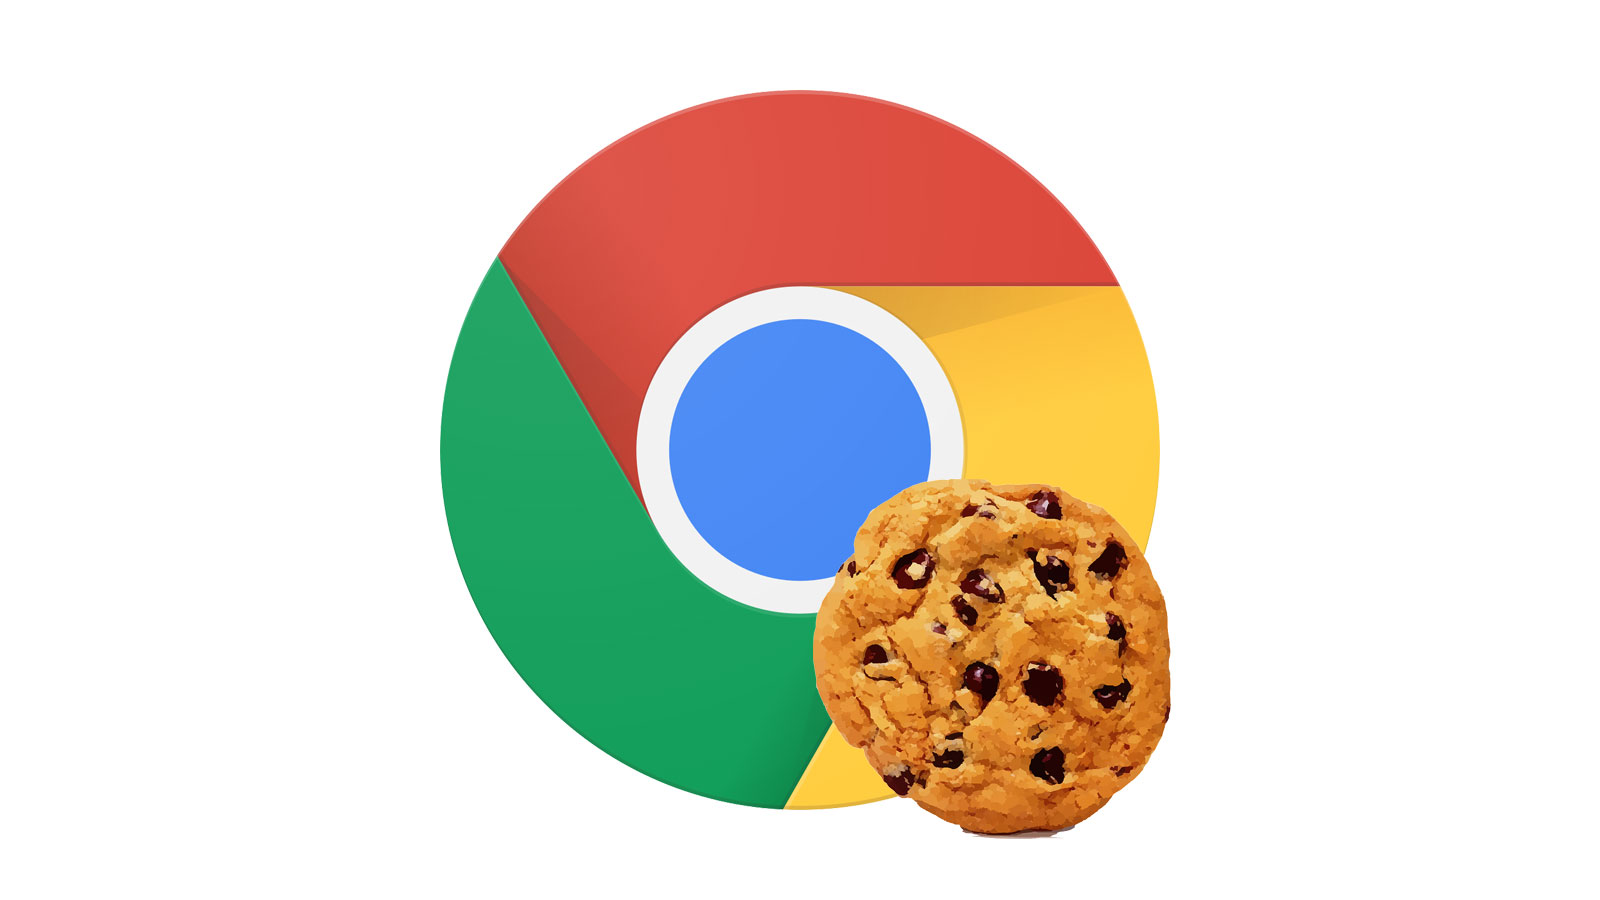 Chrome cookie. Куки гугла как называются. Сторонние cookies